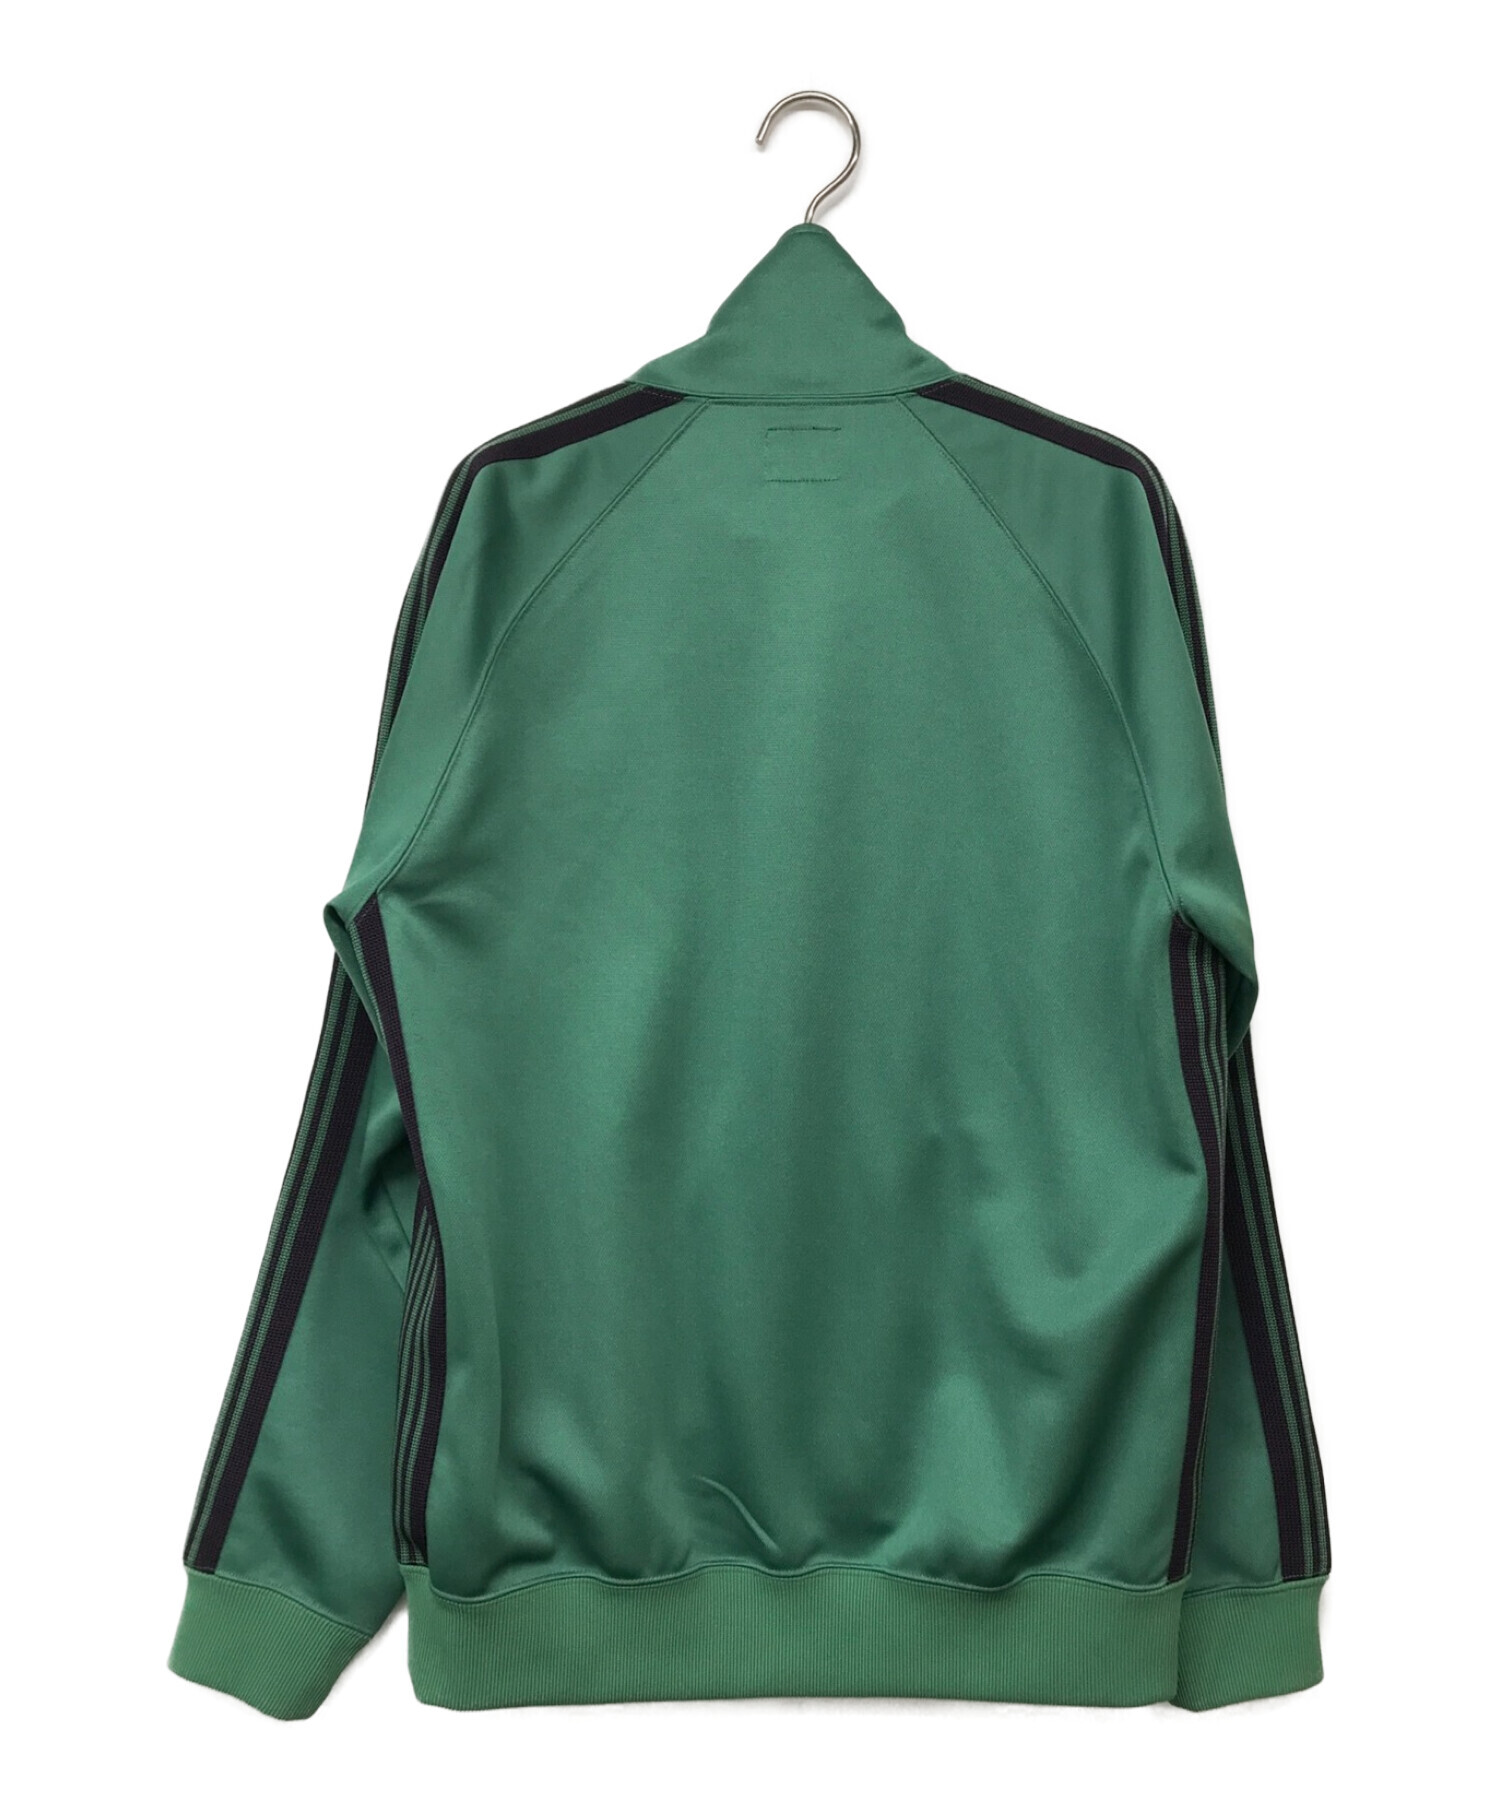 Needles track jacket teal green Mサイズ